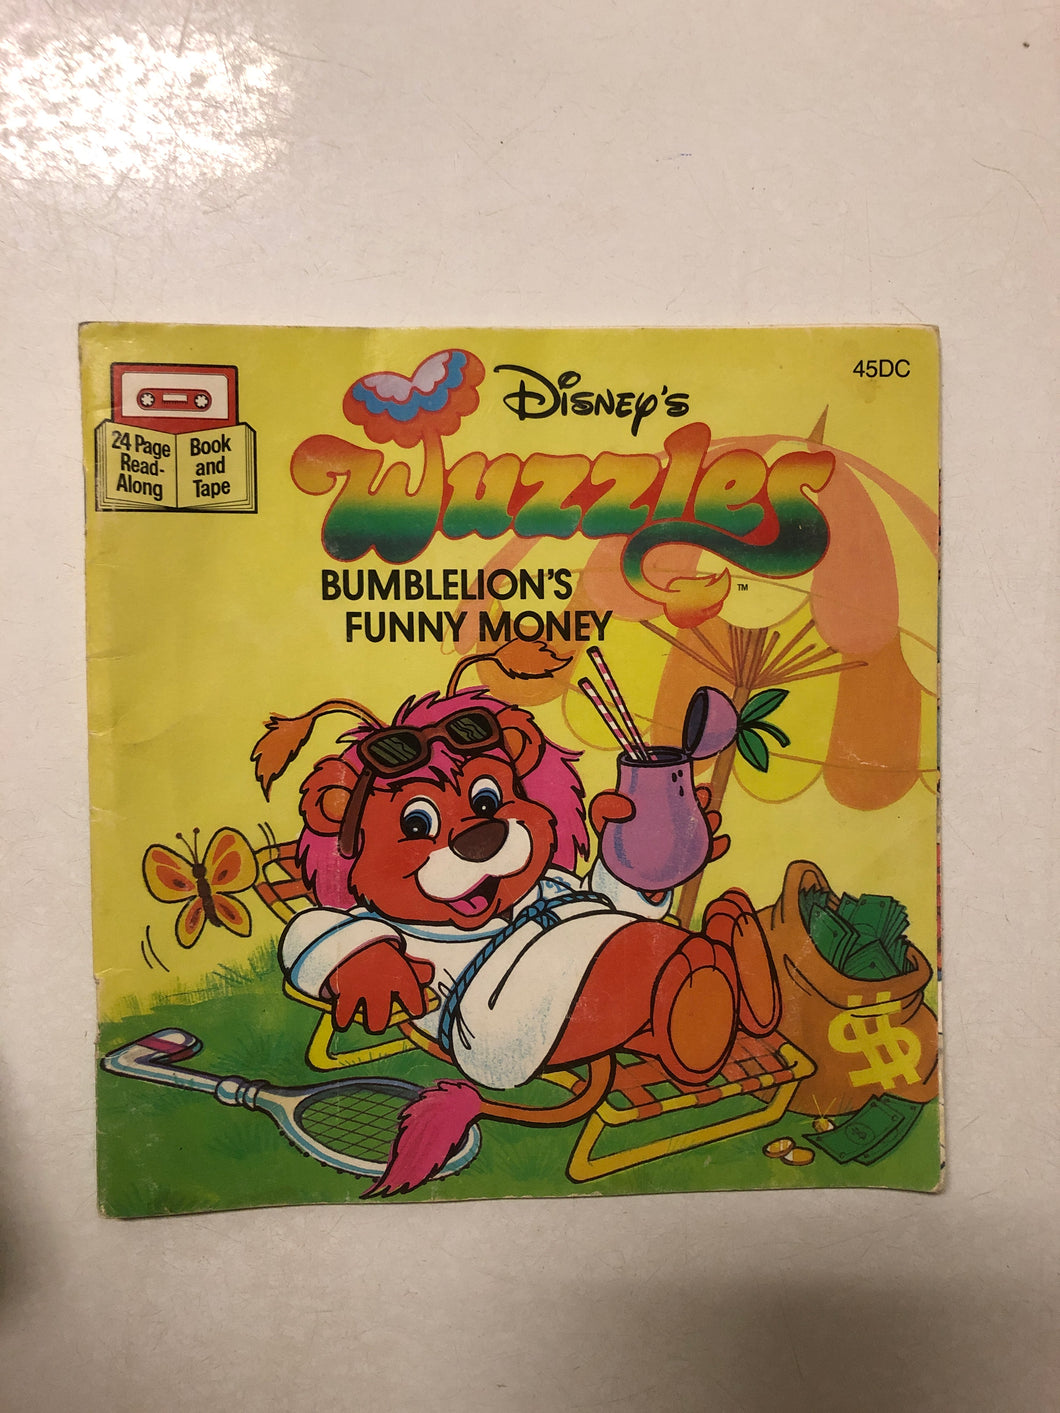 Disney’s Wuzzles Bumblelion Funny Money - Slick Cat Books